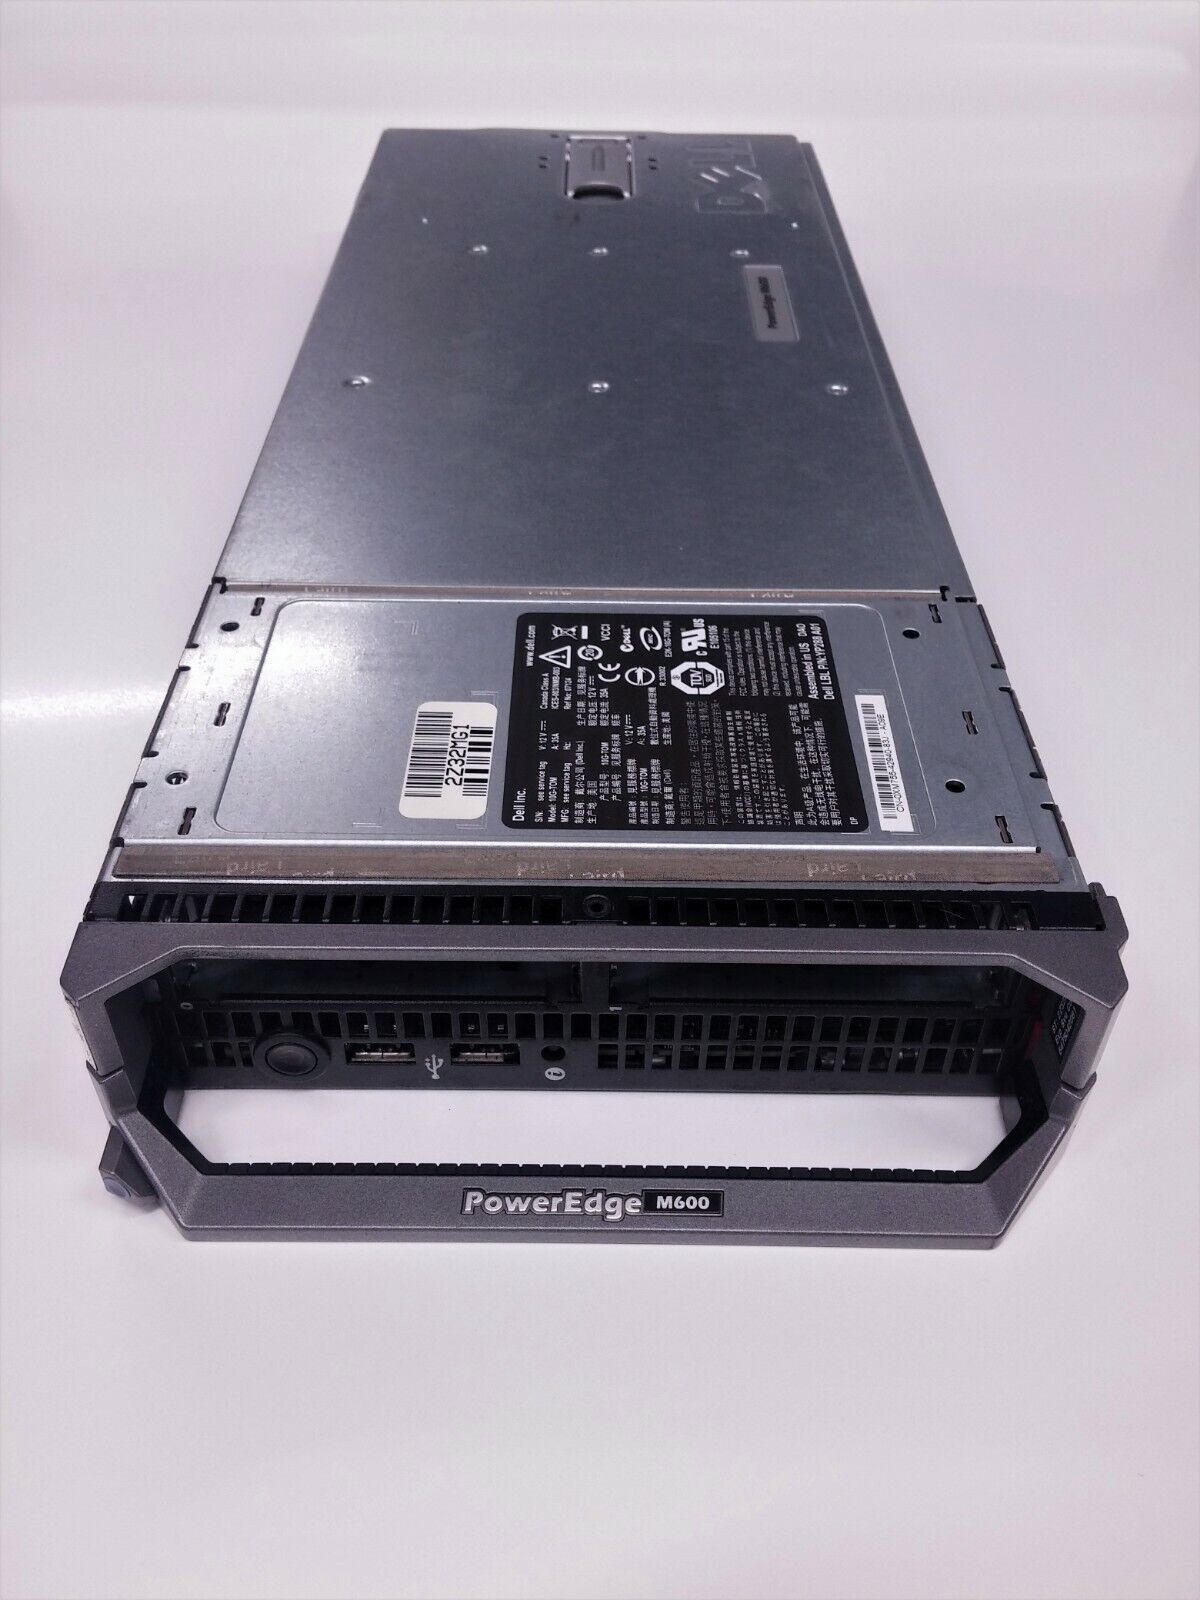 Dell PowerEdge M600 Blade Server 2x Xeon E5450 8 Cores 3.0GHz 32GB RAM 10G-TOM